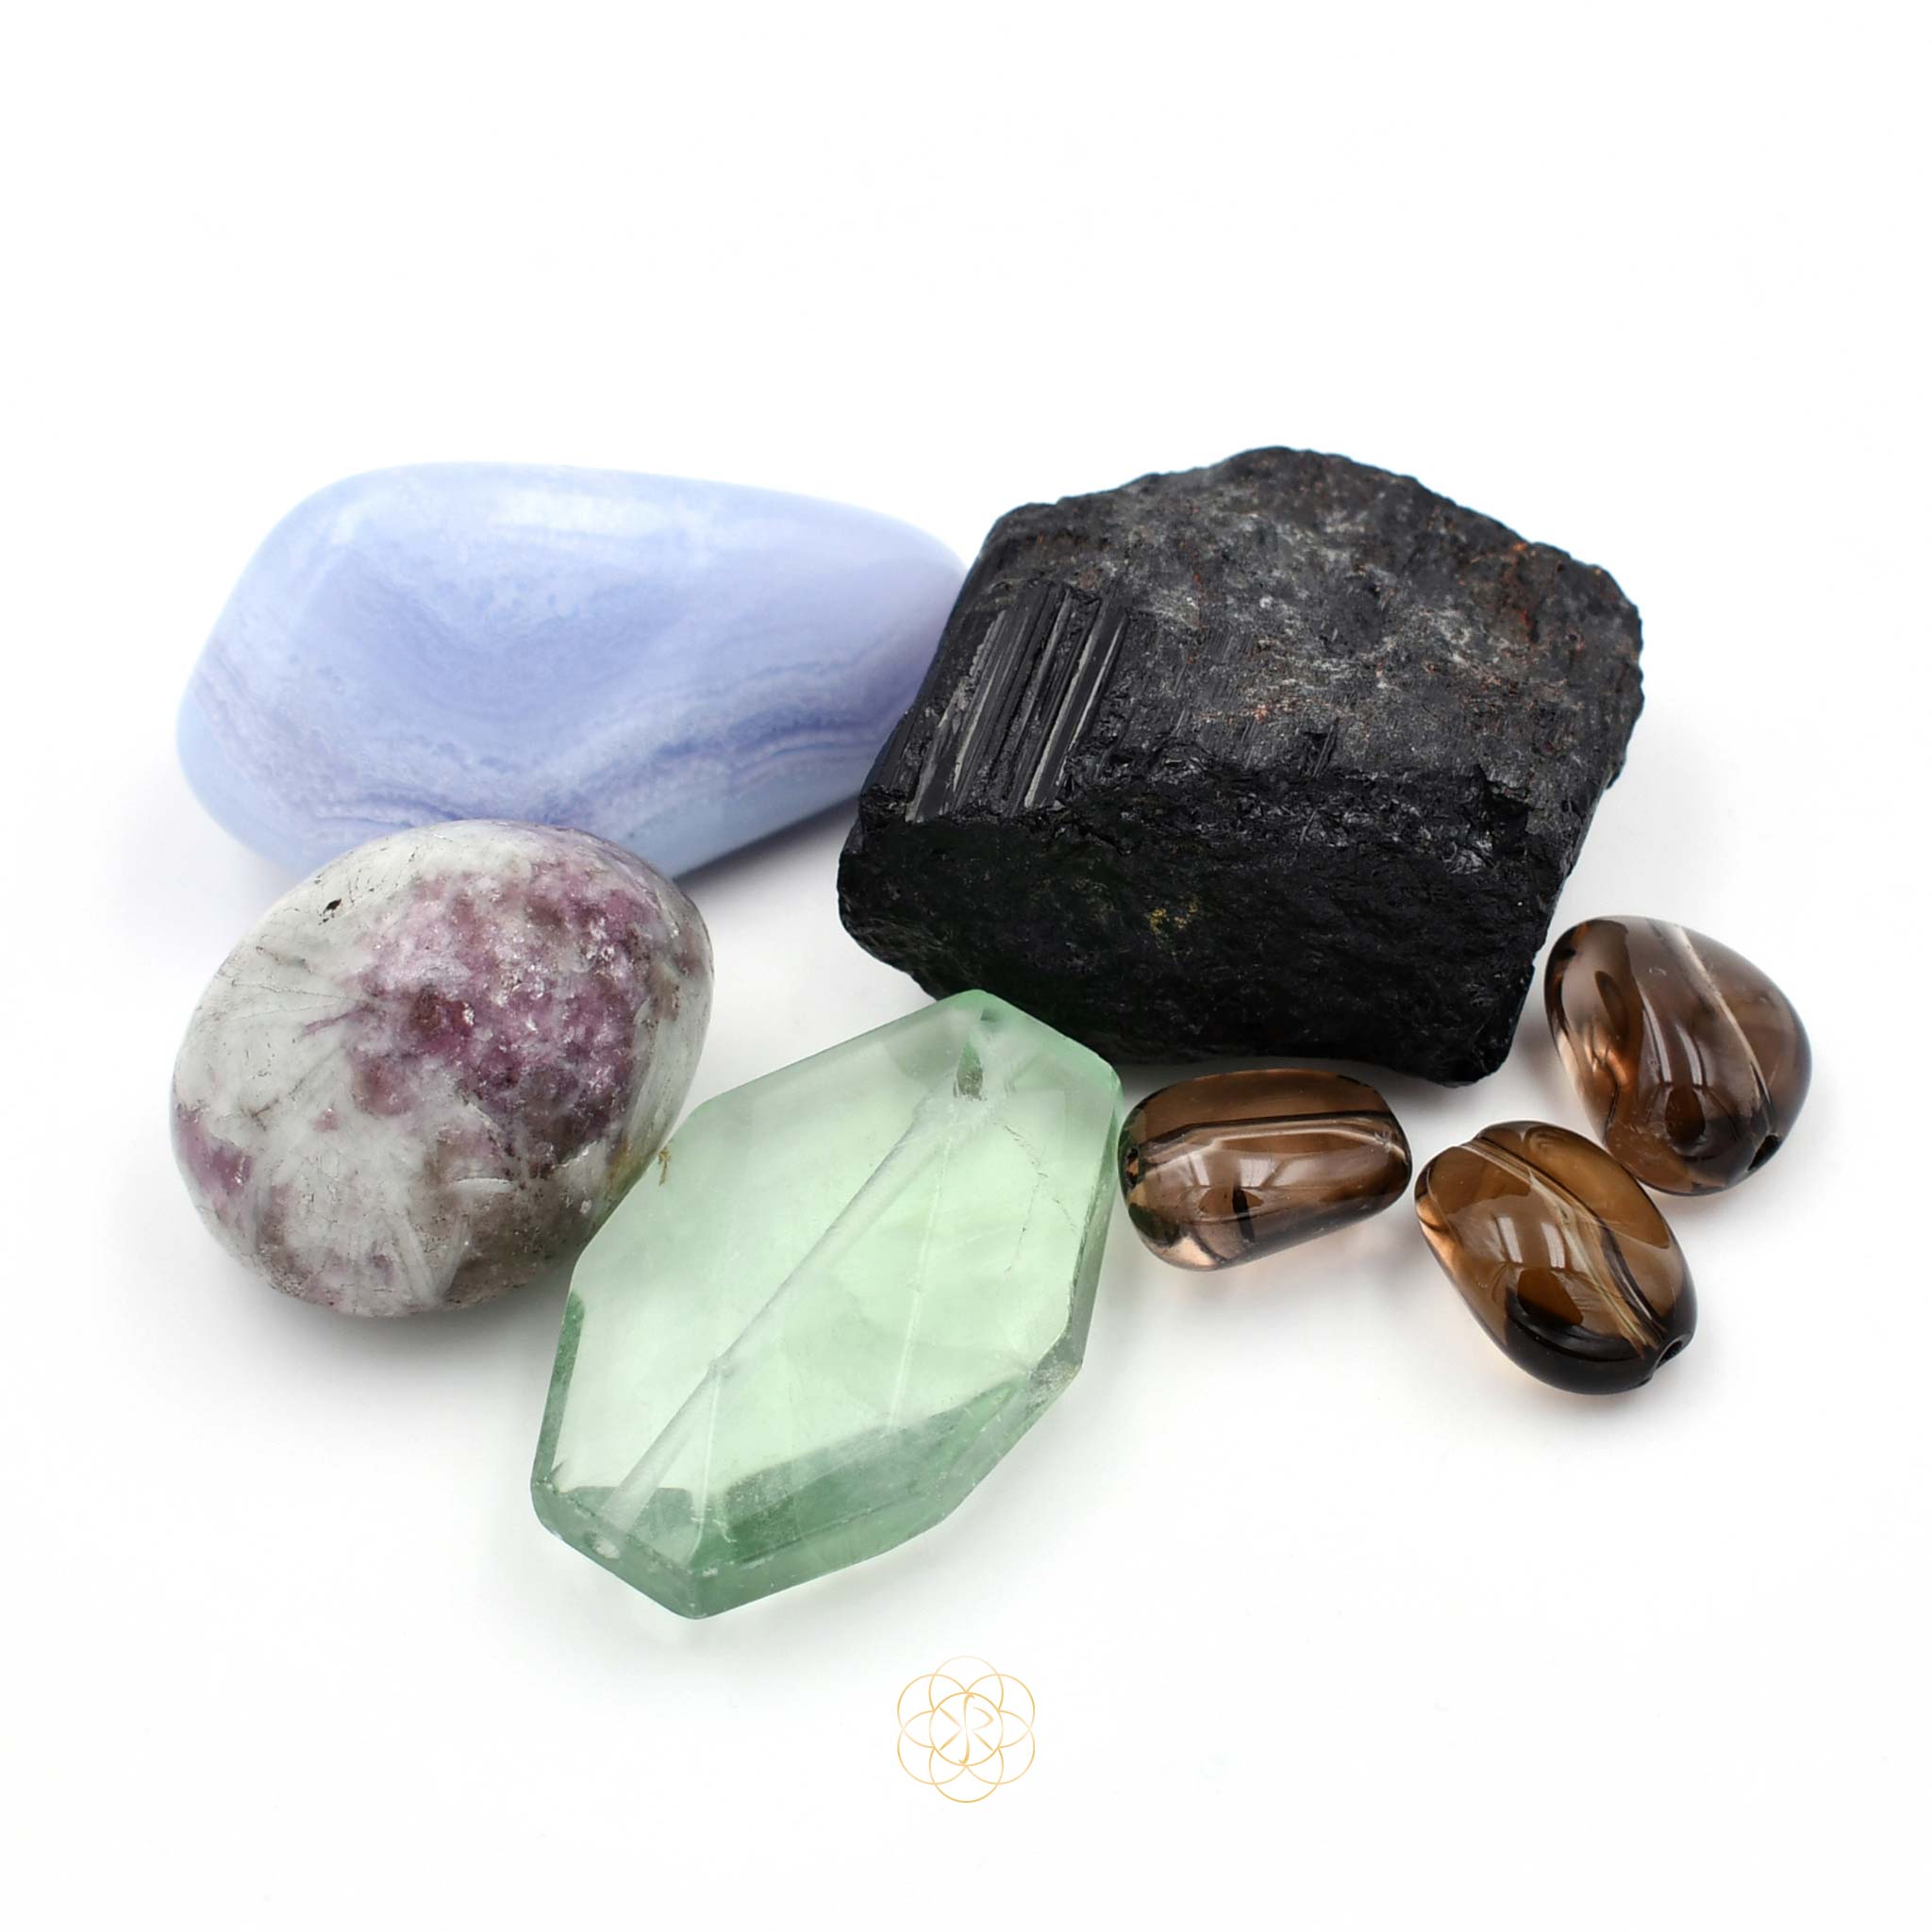 Shop Crystals for Anti-Anxiety & Focus | Kim R Sanchez